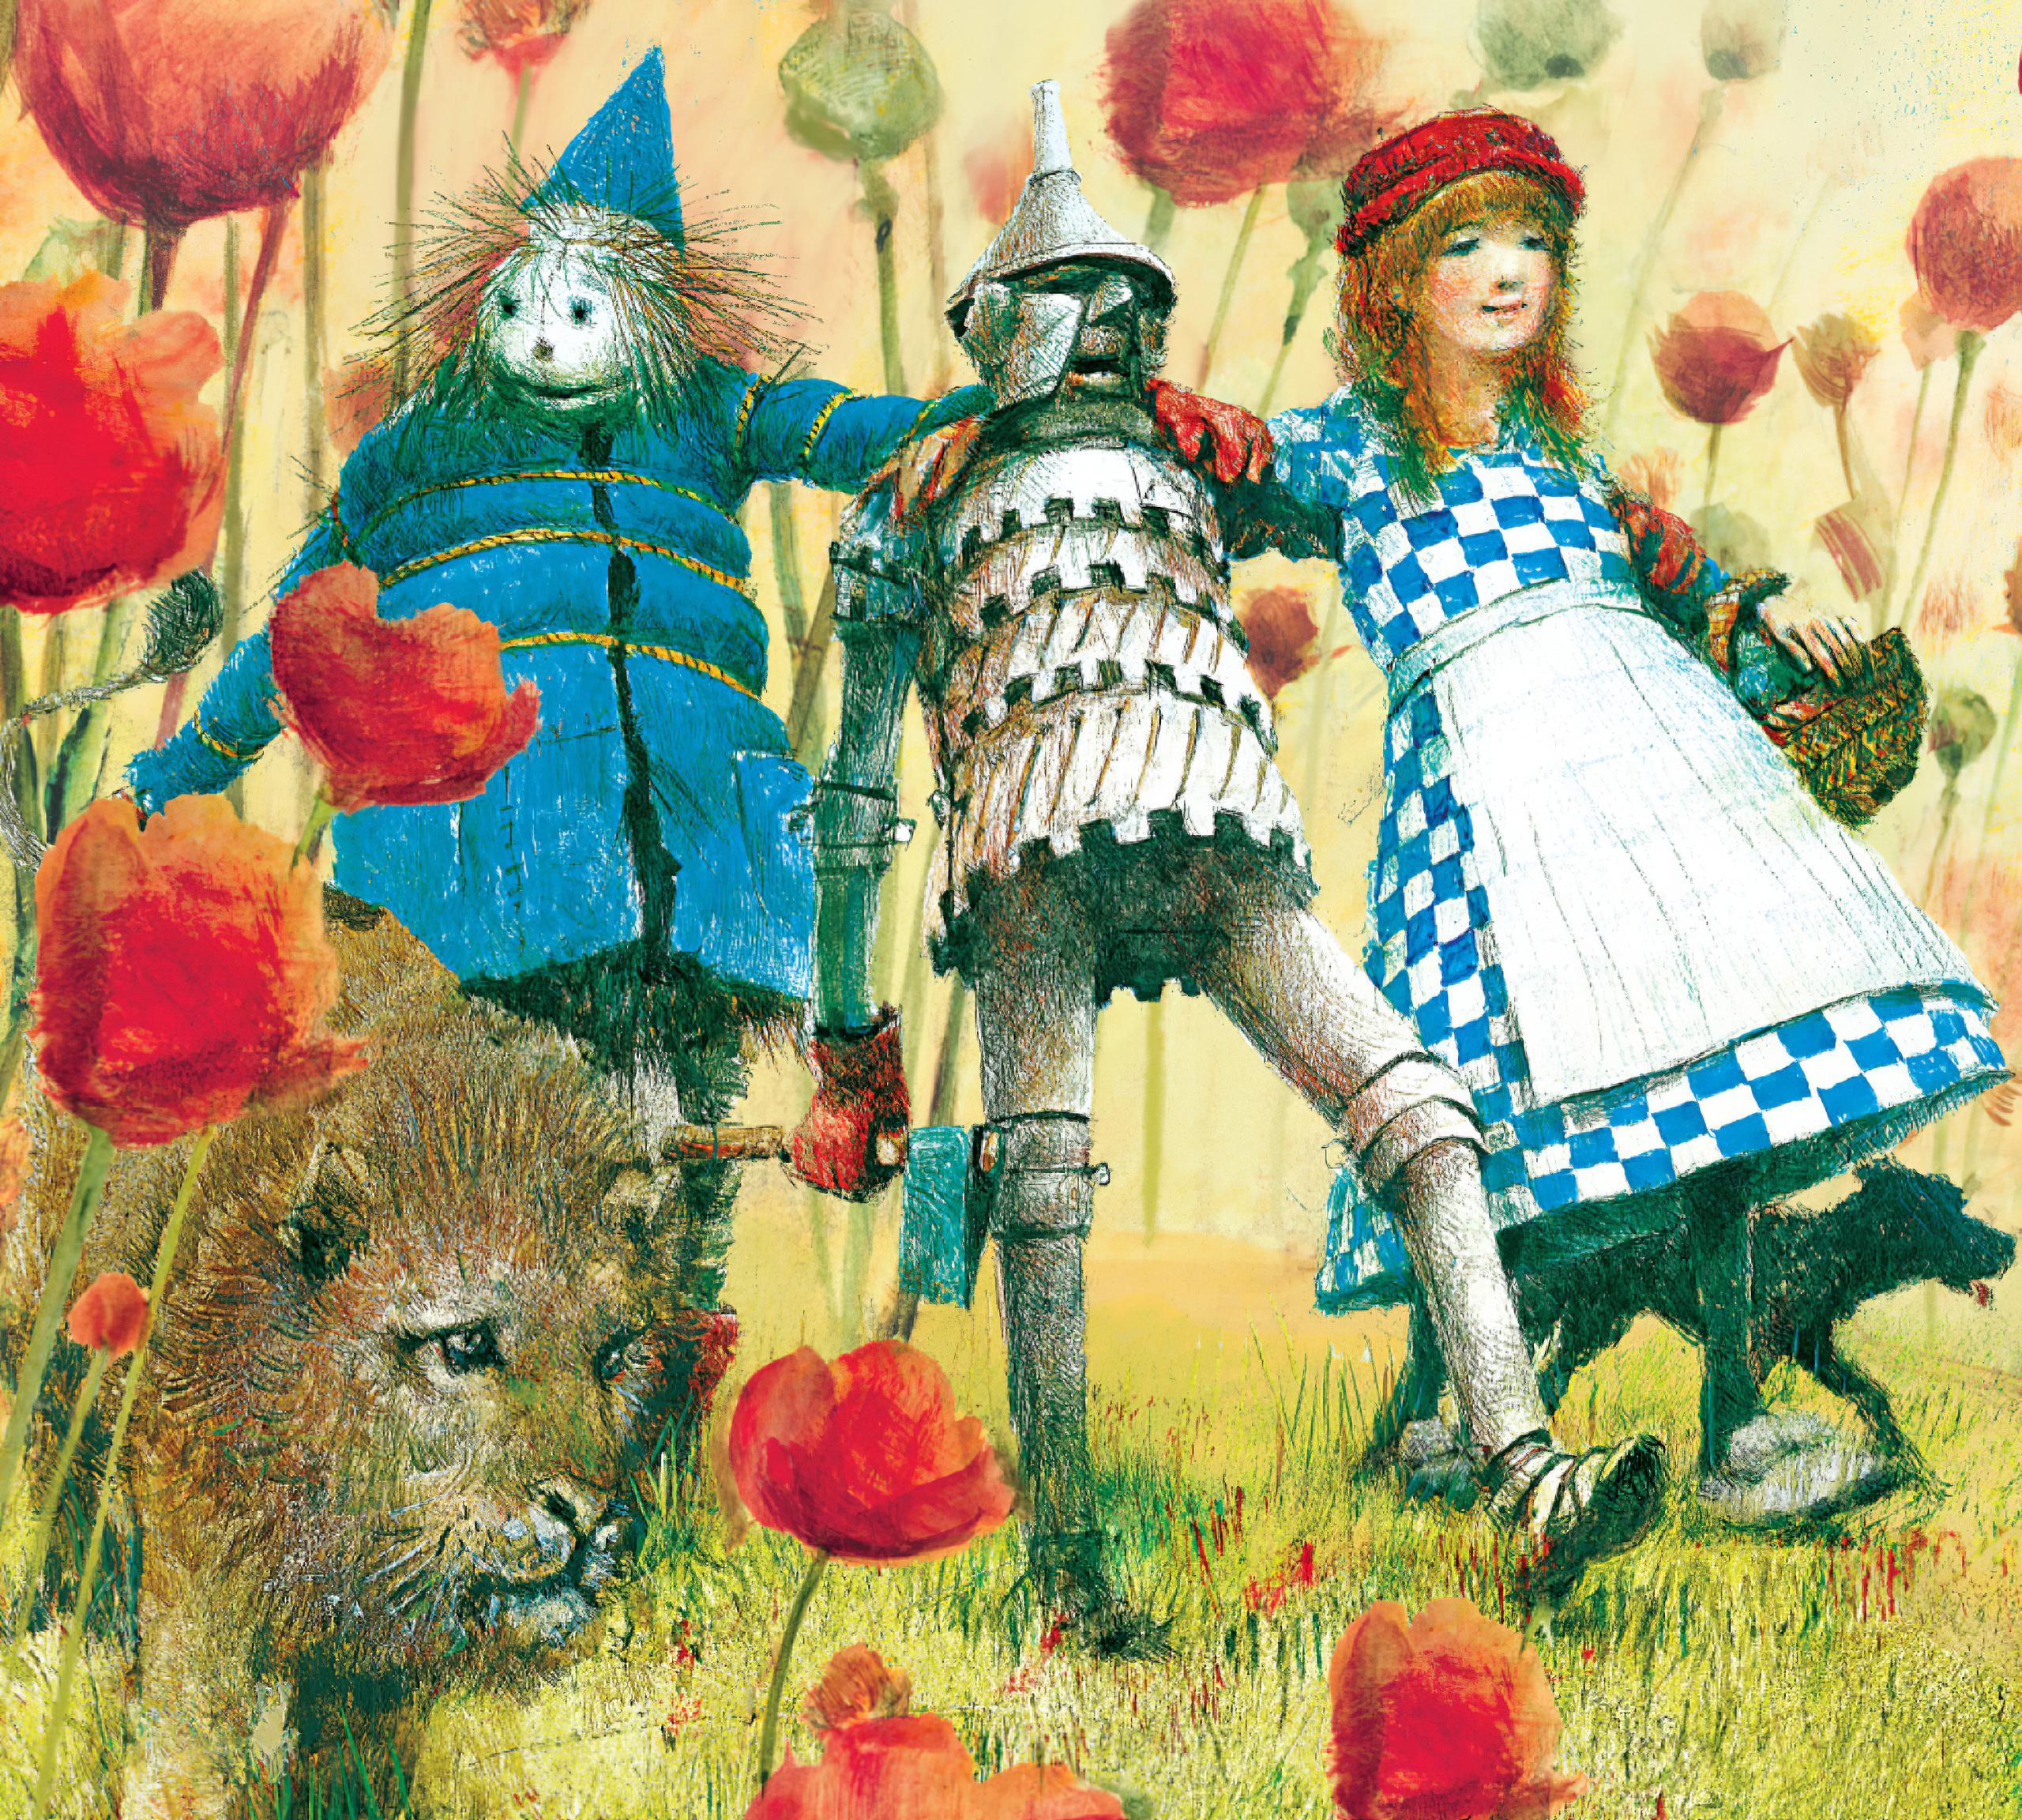 Il libro The Wonderful Wizard of Oz in russo